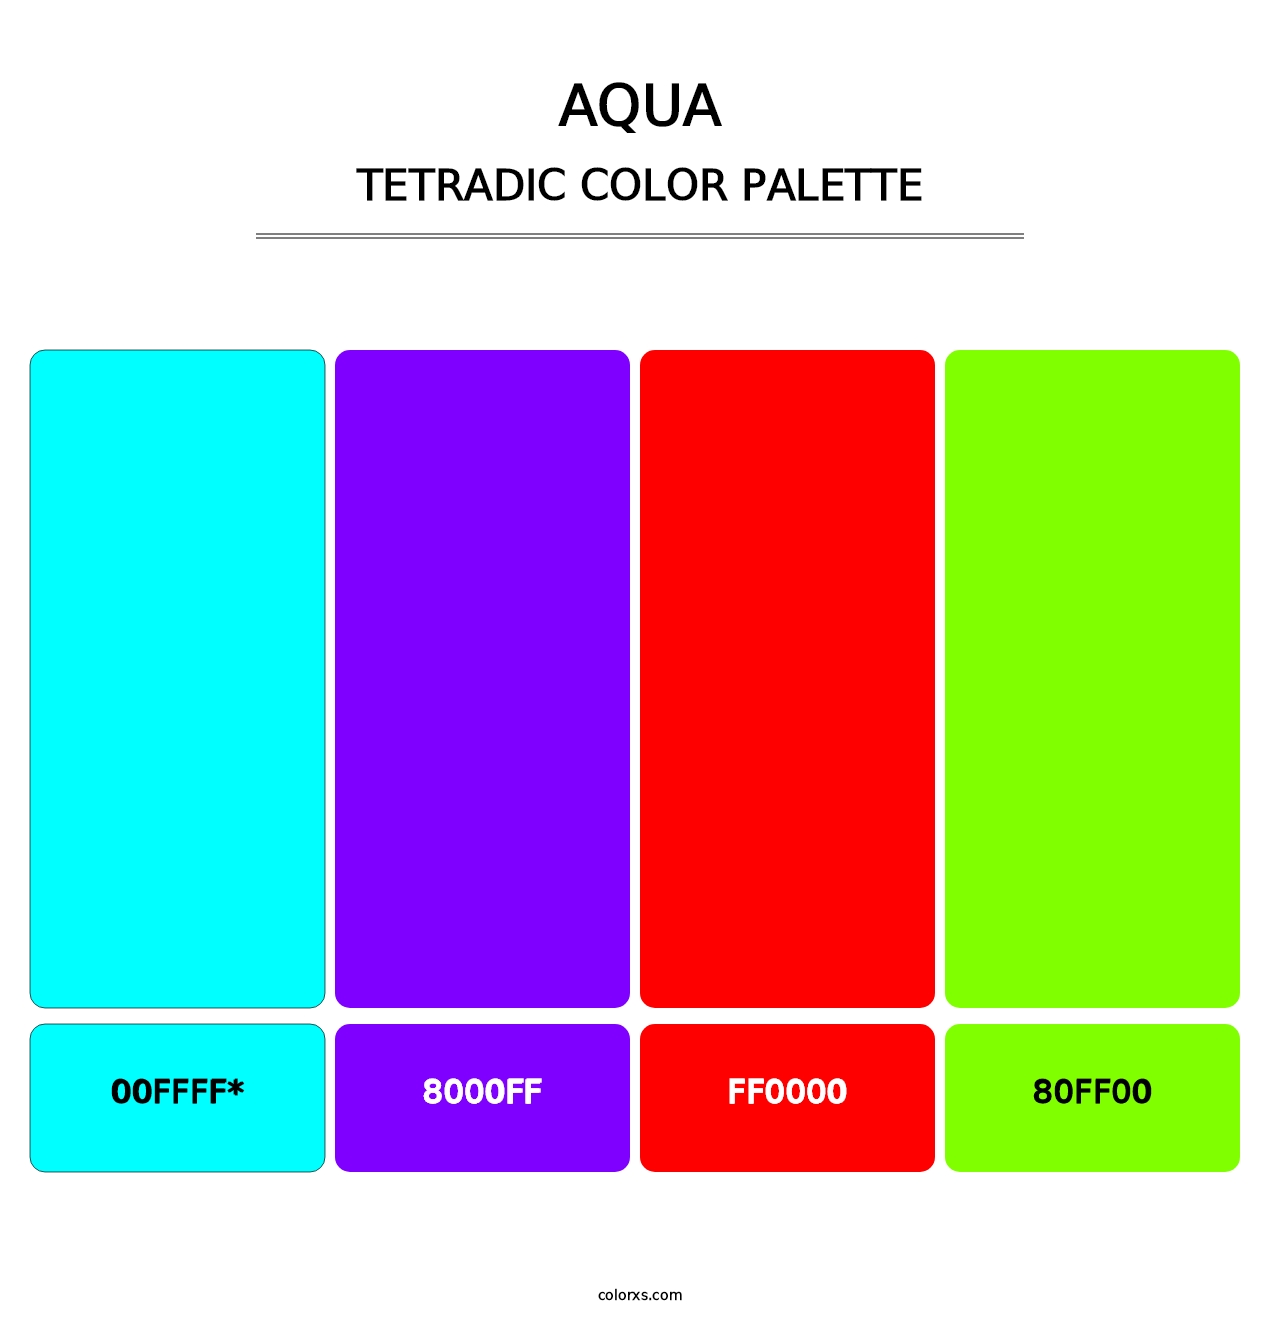 Aqua - Tetradic Color Palette